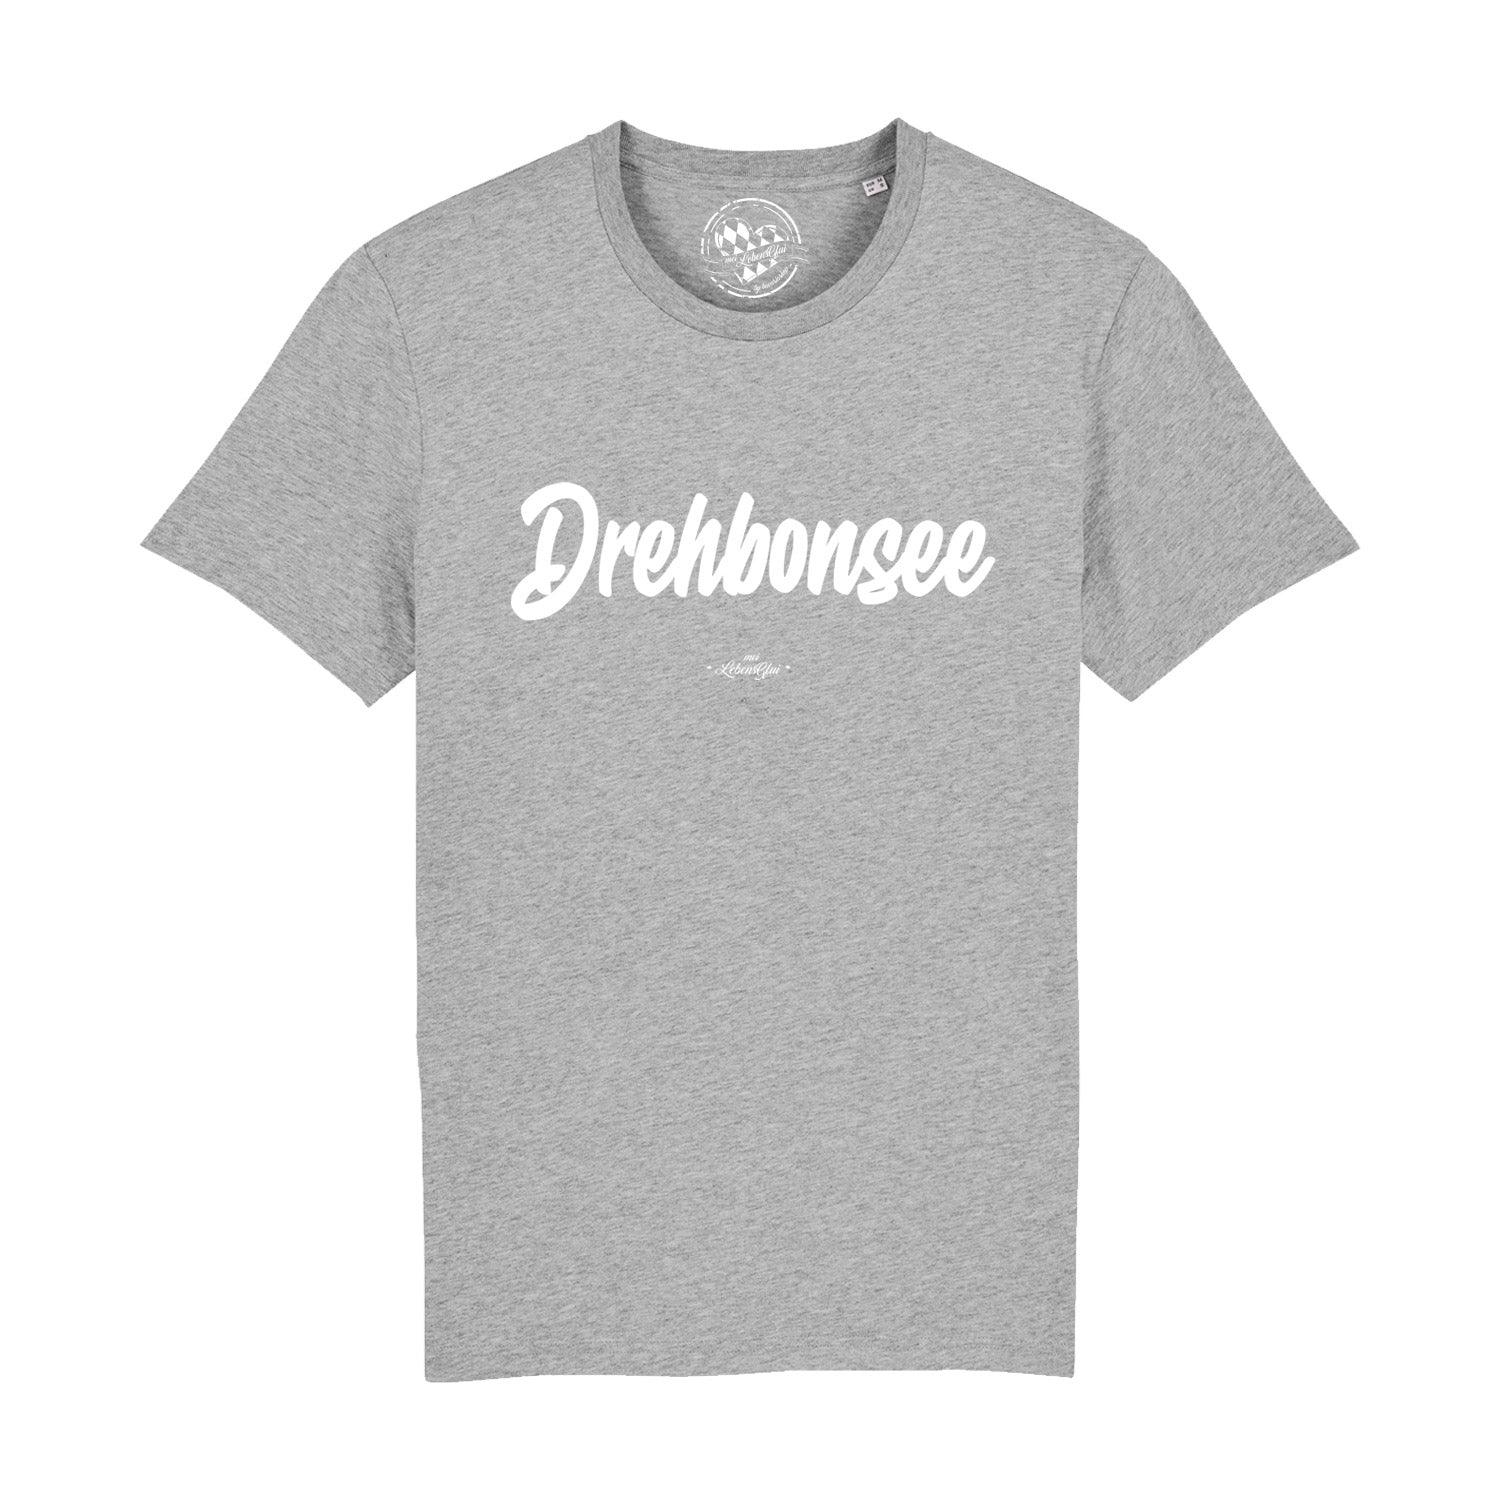 Herren T-Shirt "Drehbonsee" - bavariashop - mei LebensGfui